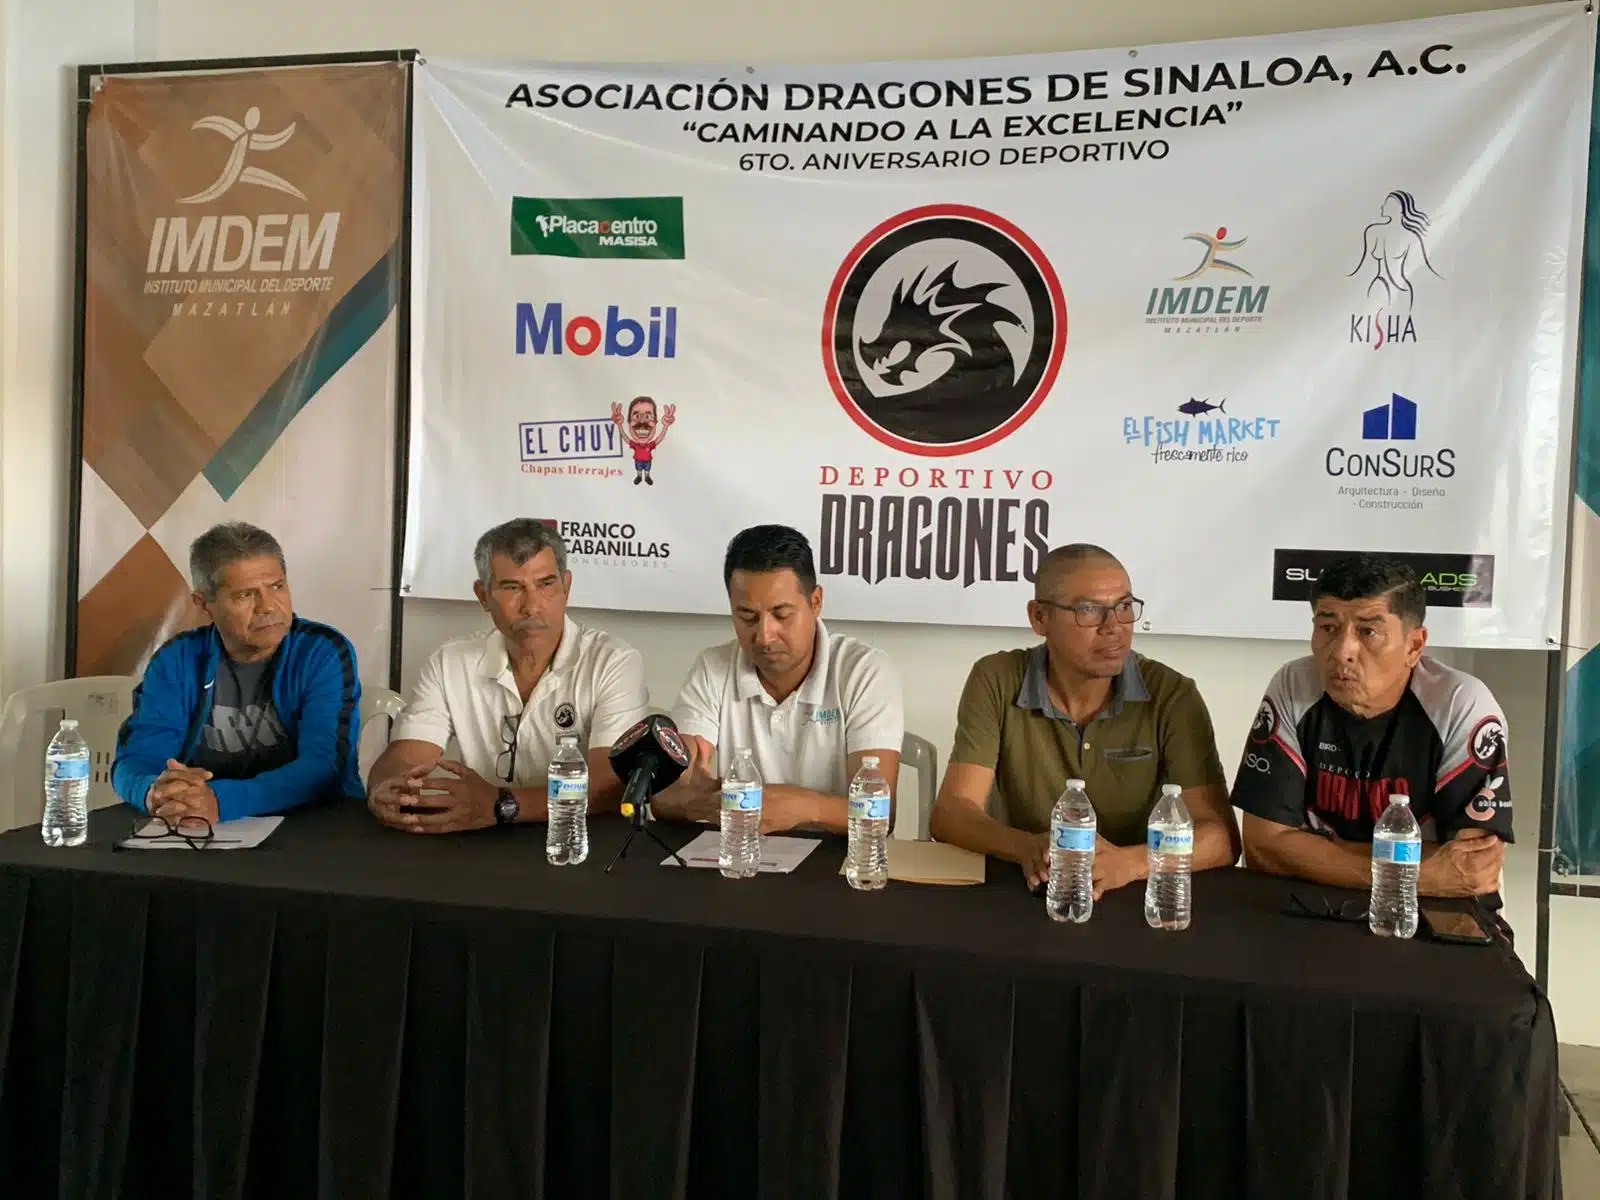 Dragones de Sinaloa